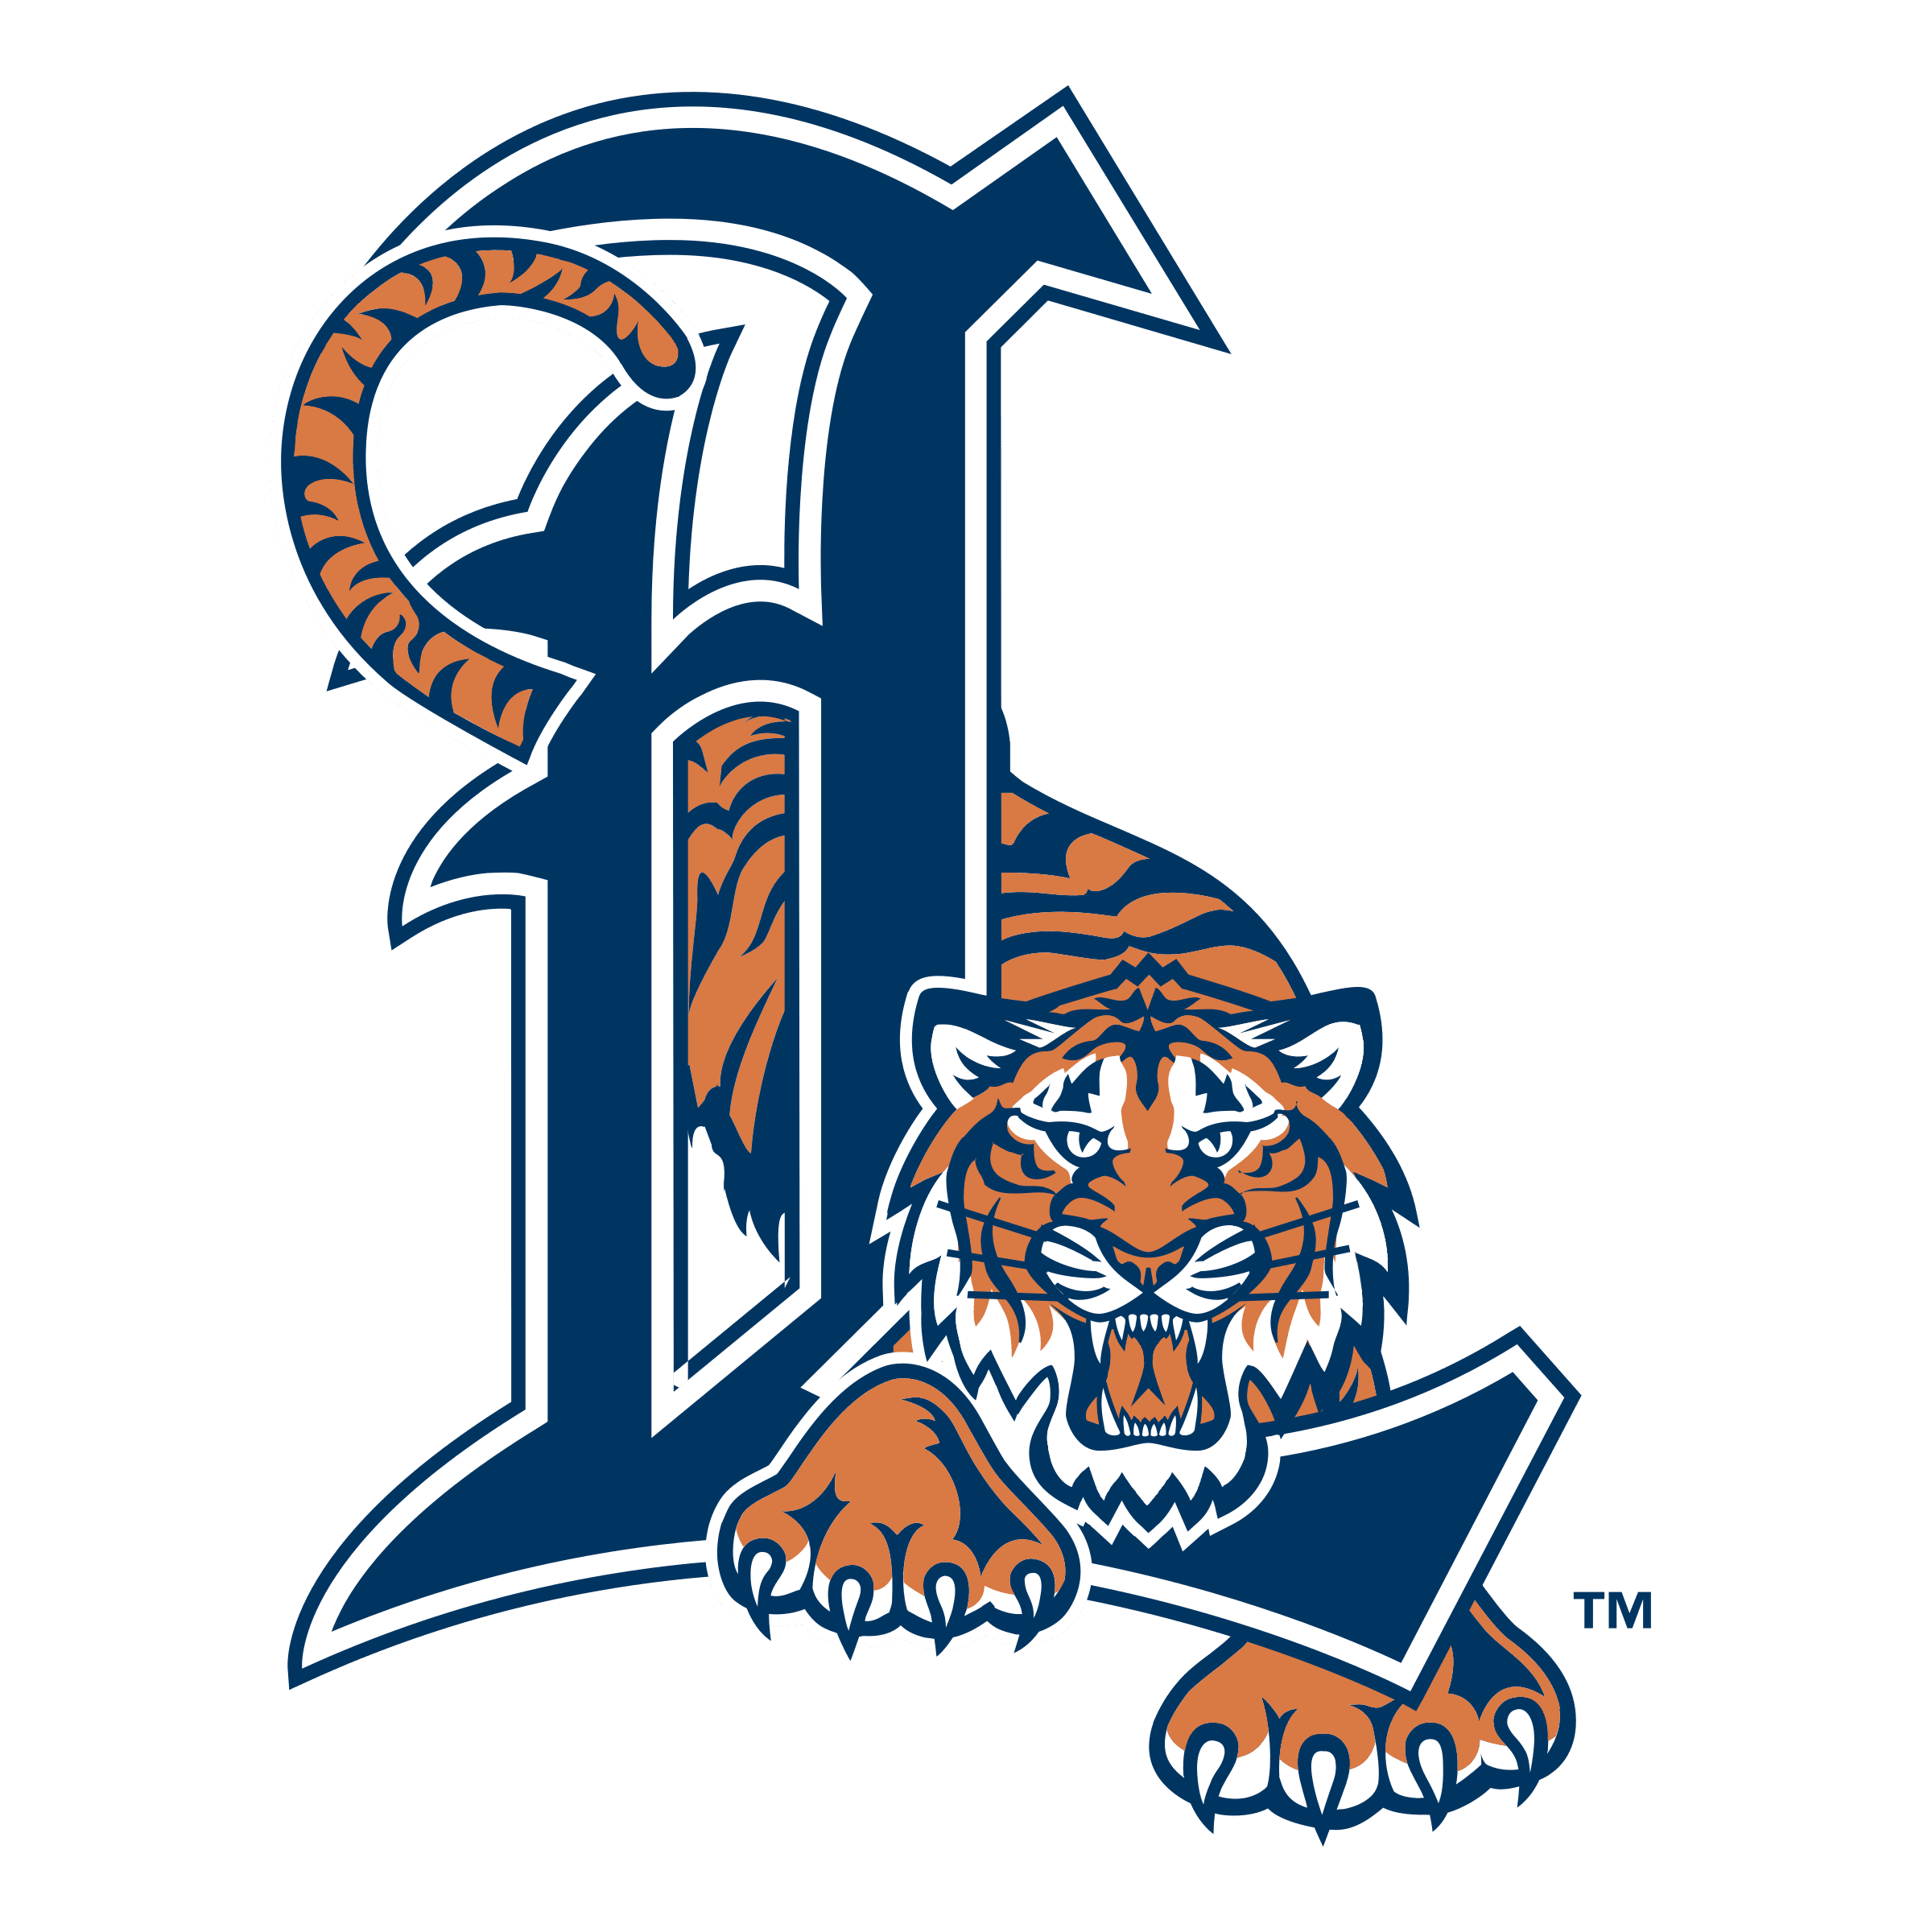 Lakeland Tigers Logo PNG Transparent & SVG Vector ...